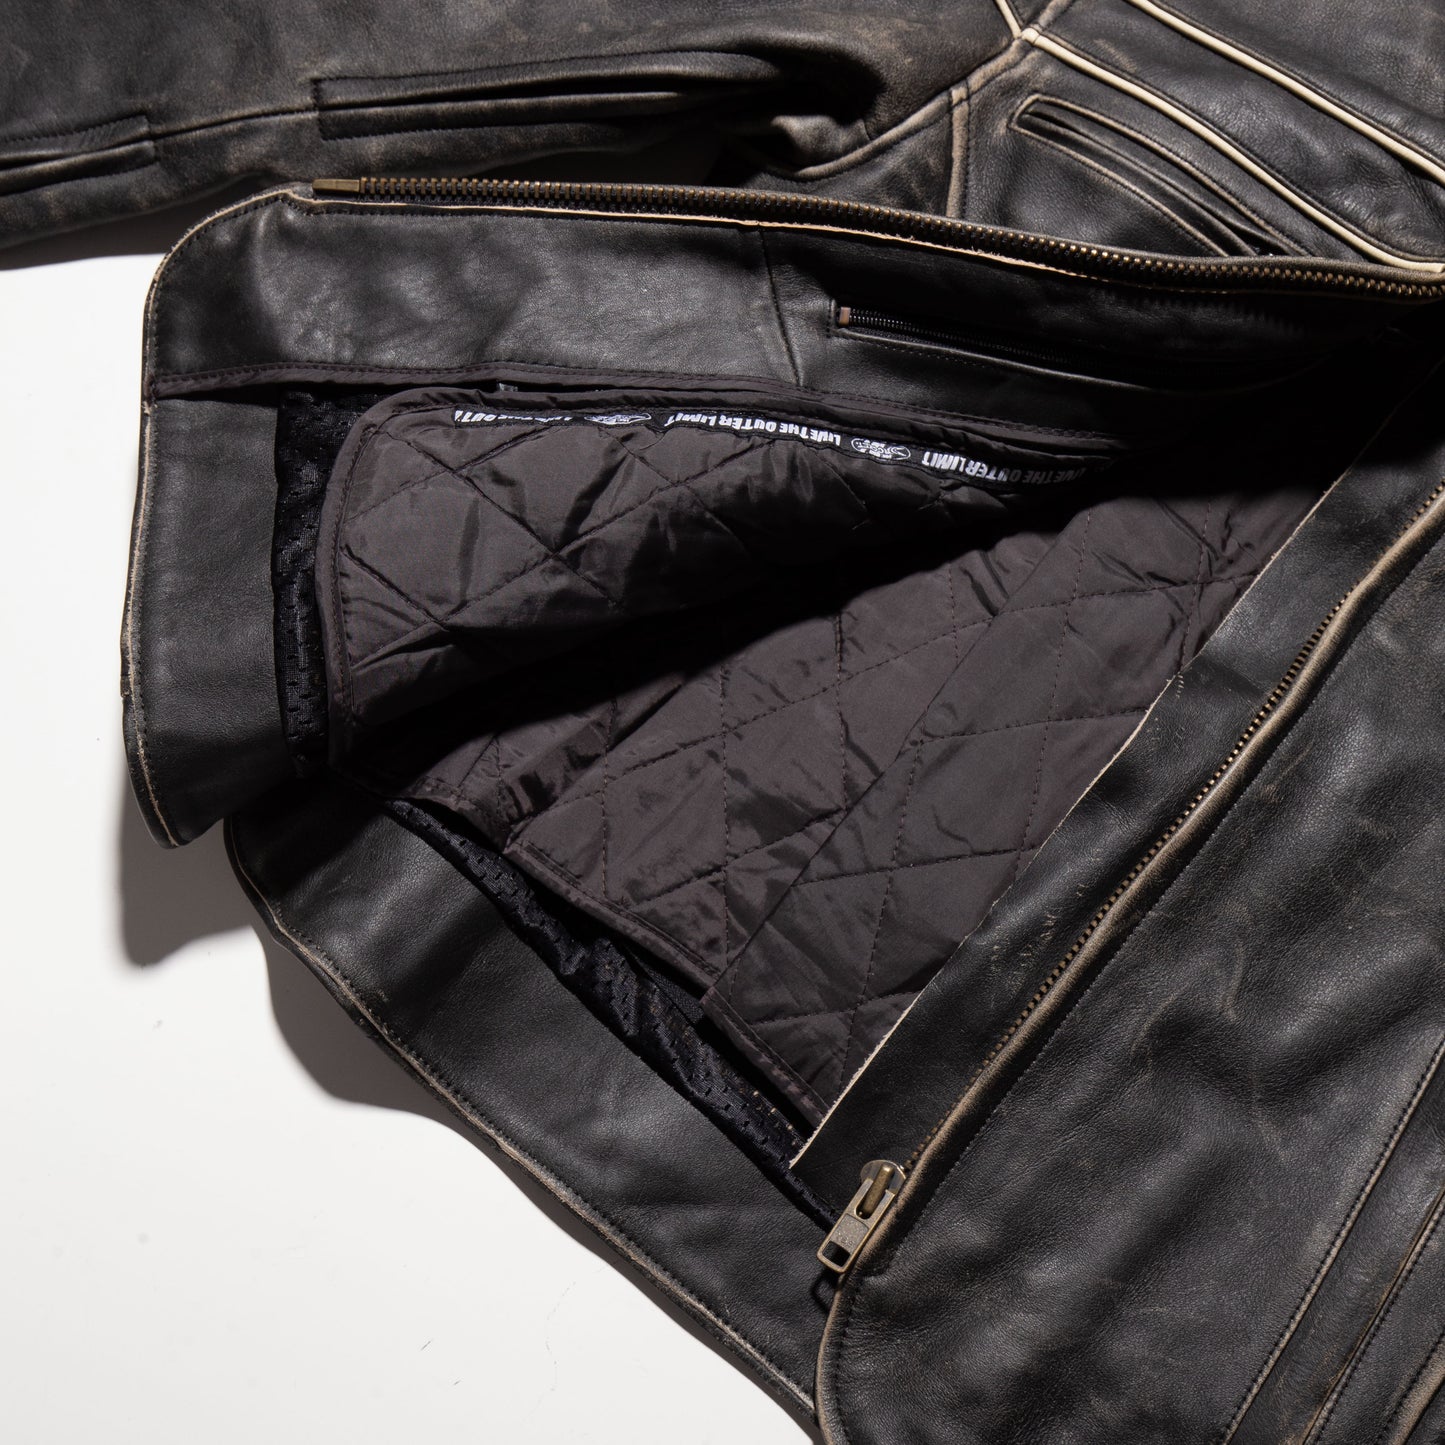 vintage rocket faded motocross leather jacket